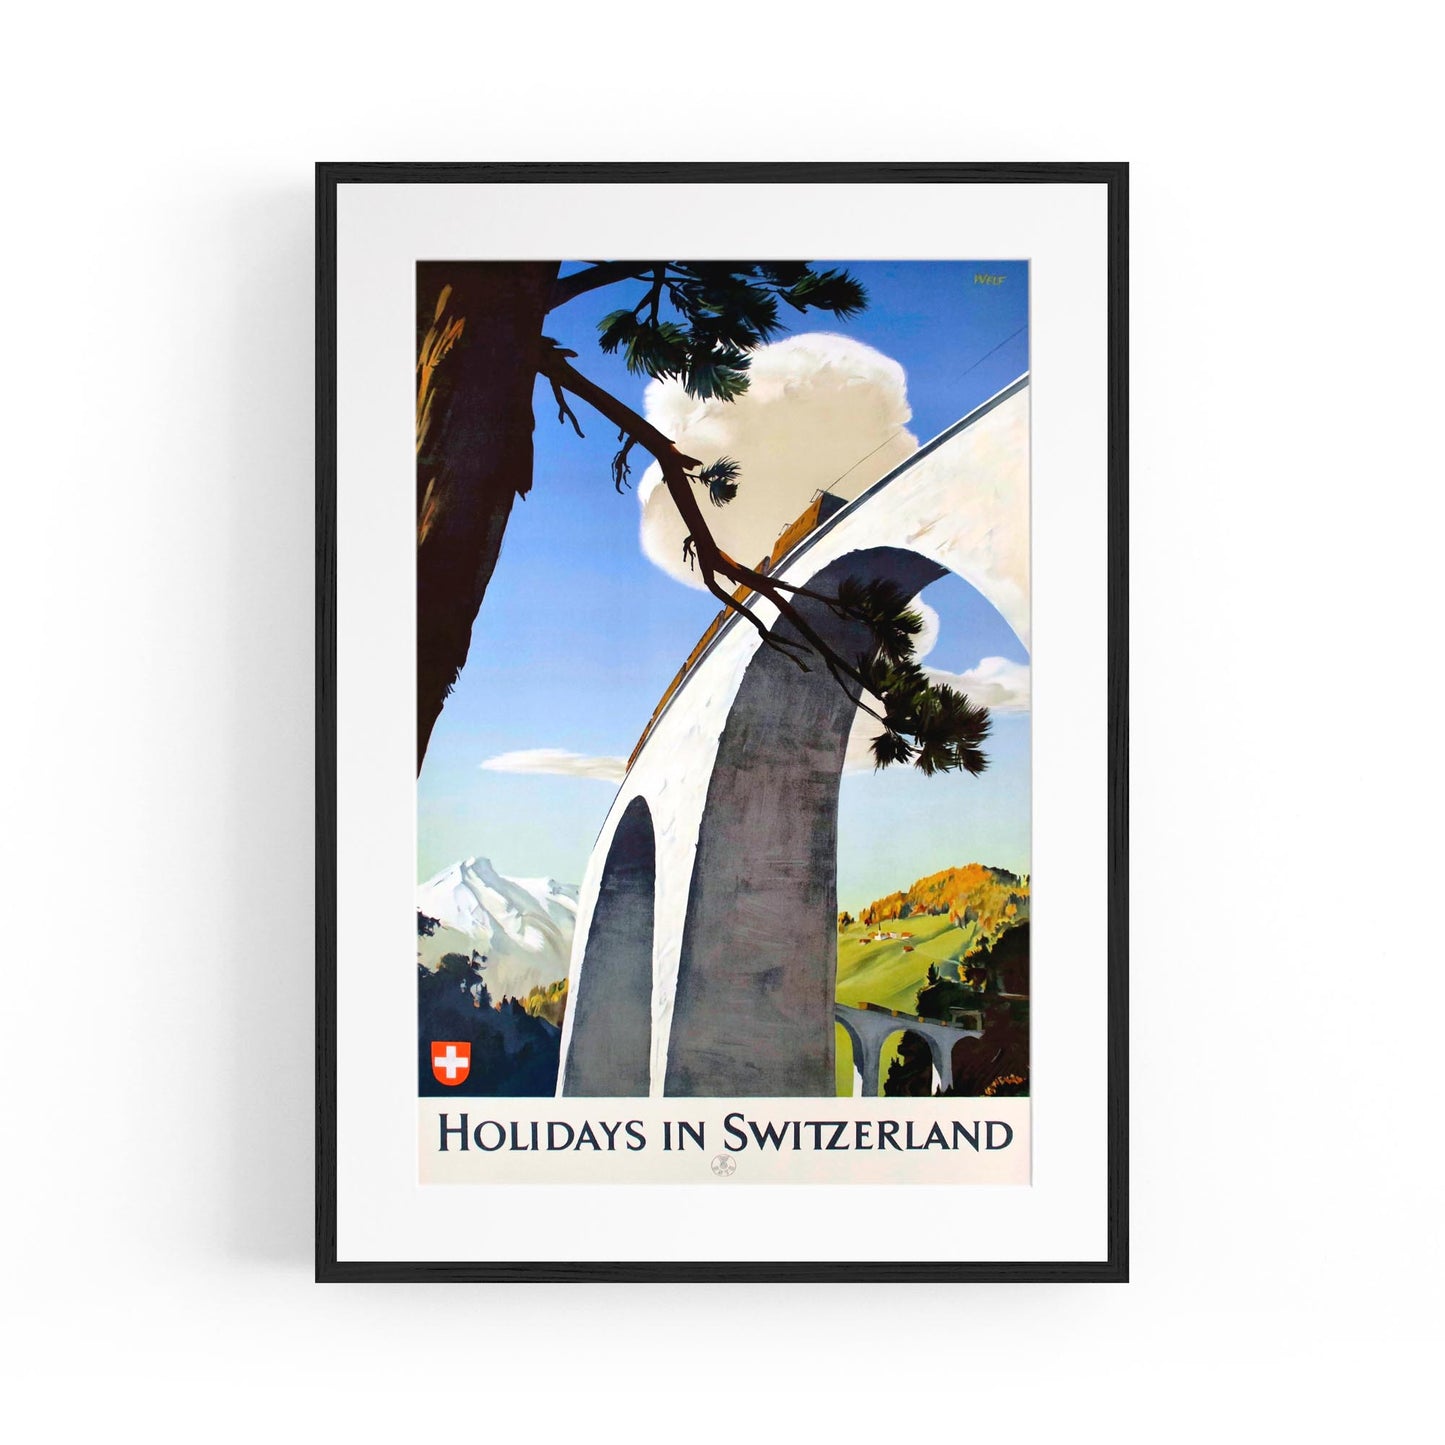 Holidays in Switzerland by Edmund Welf | Framed Vintage Travel Poster